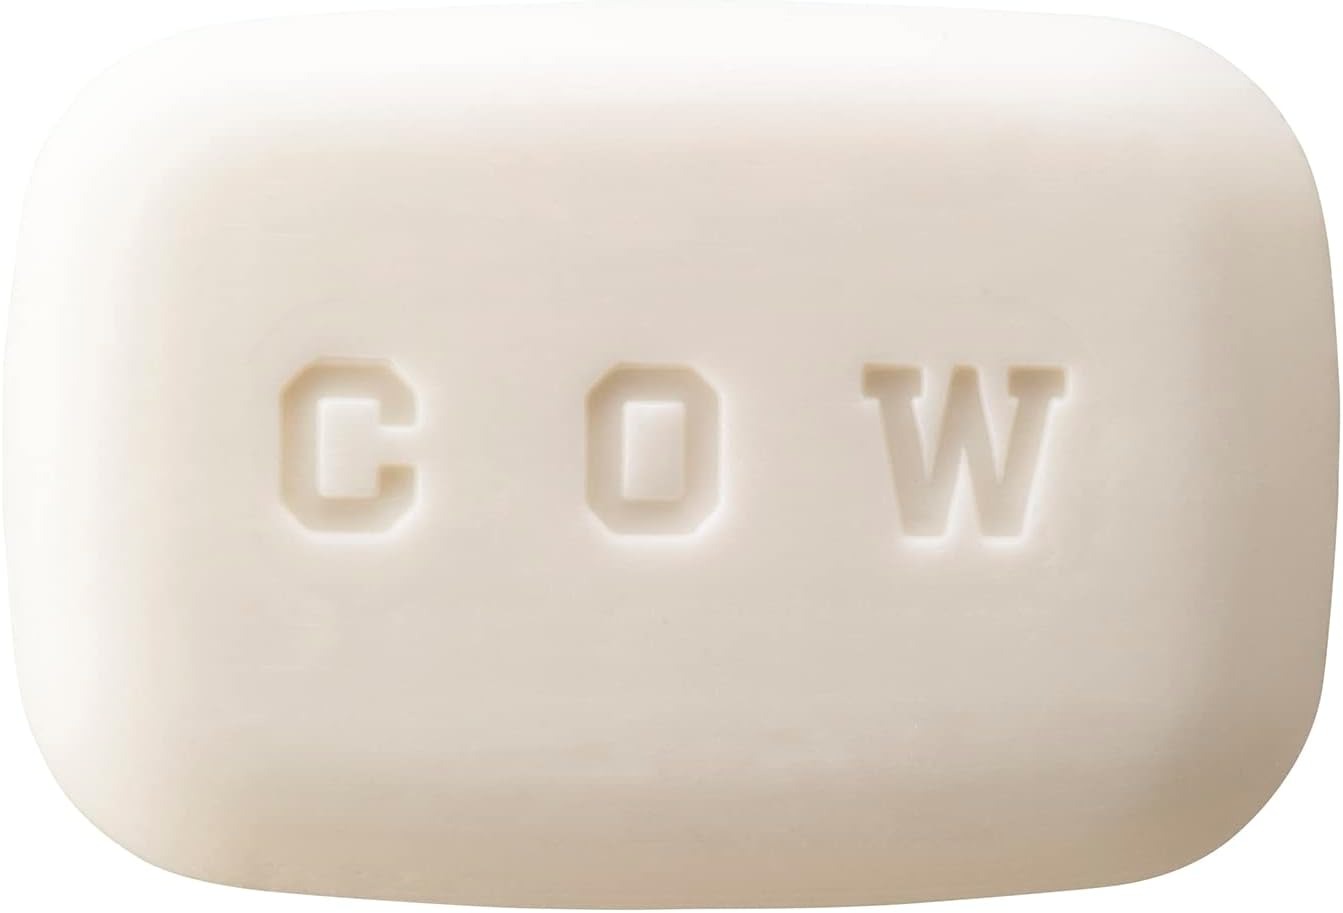 Cow Brand Beauty Soap  สบู่น้ำนมวัว 3 ก้อน/กล่องสบู่ก้อน ยอดขายอันดับ 1 จากญี่ปุ่น